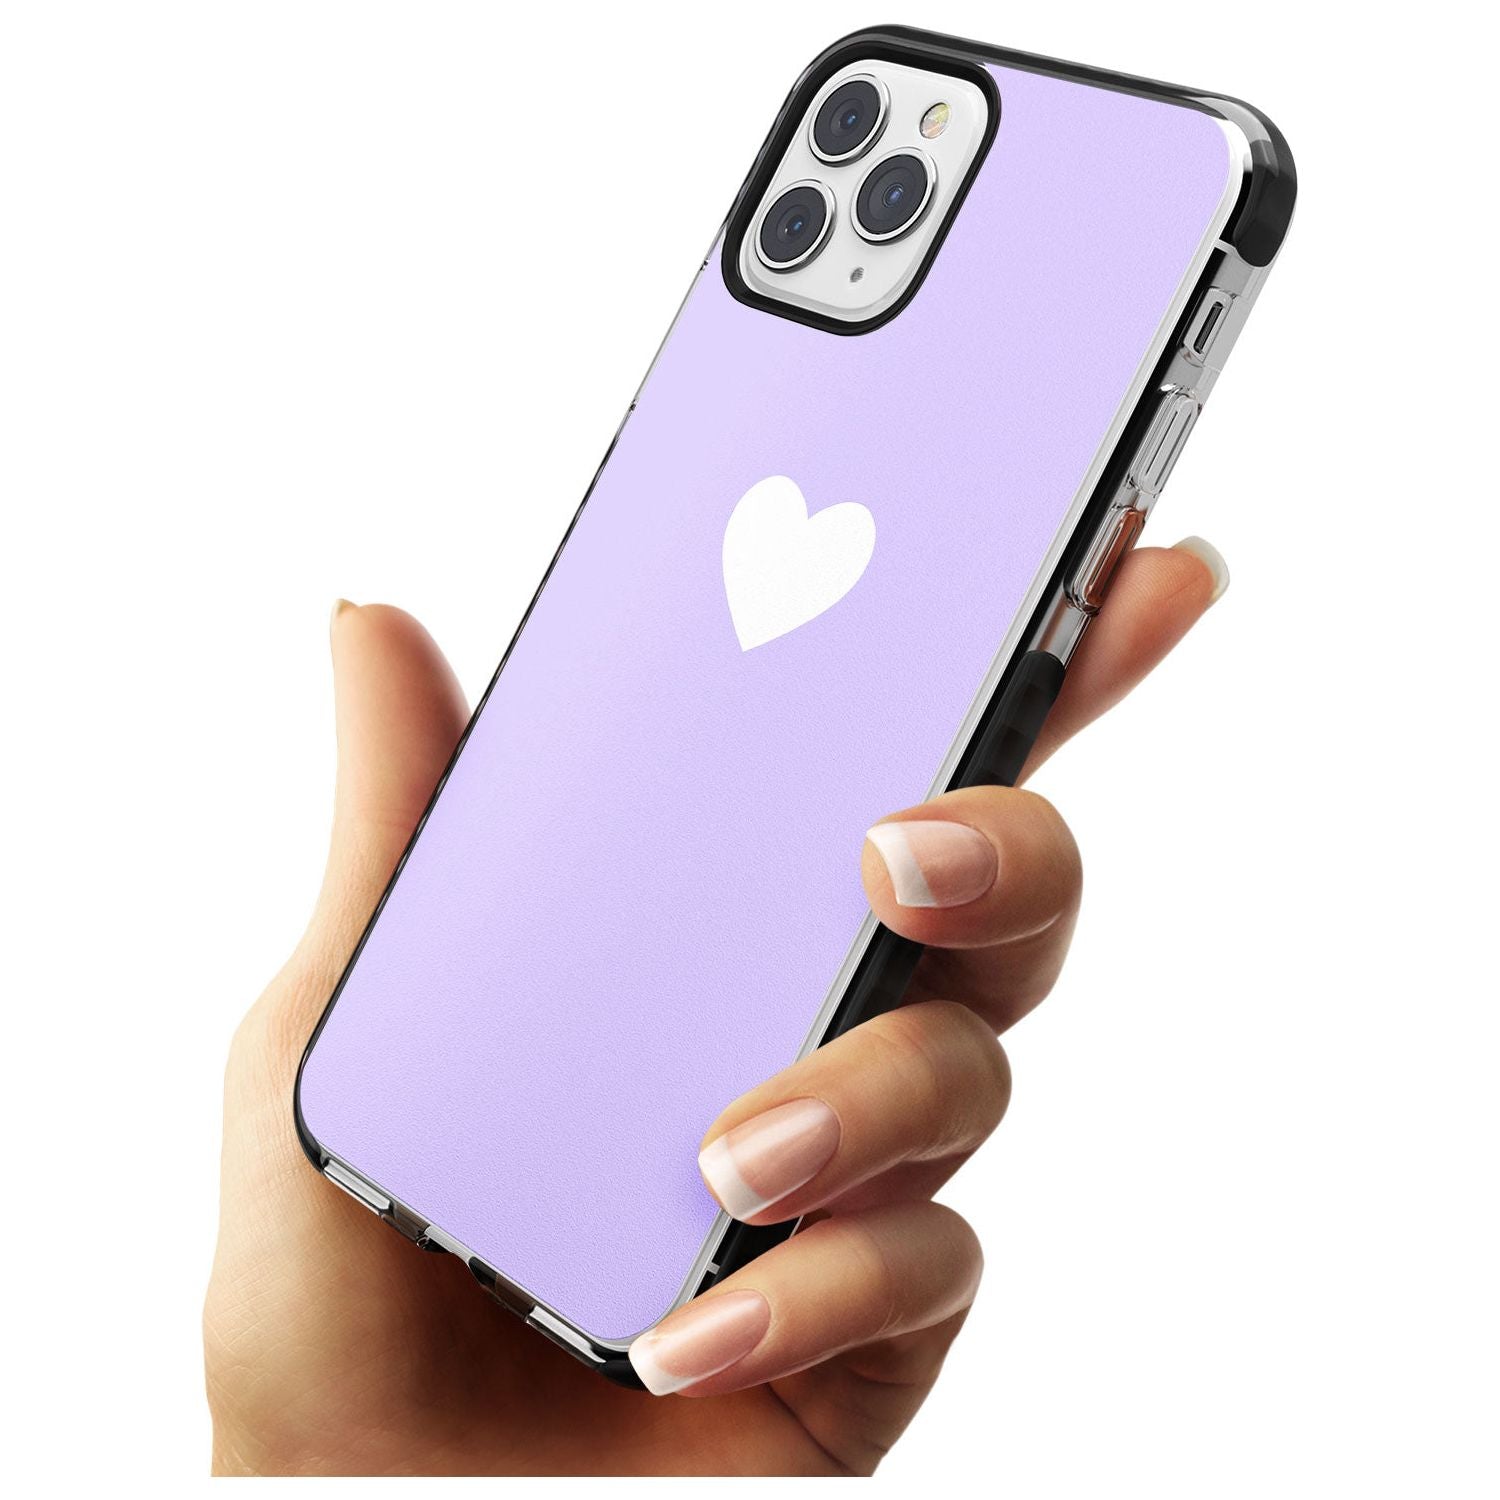 Single Heart White & Pale Purple Black Impact Phone Case for iPhone 11 Pro Max